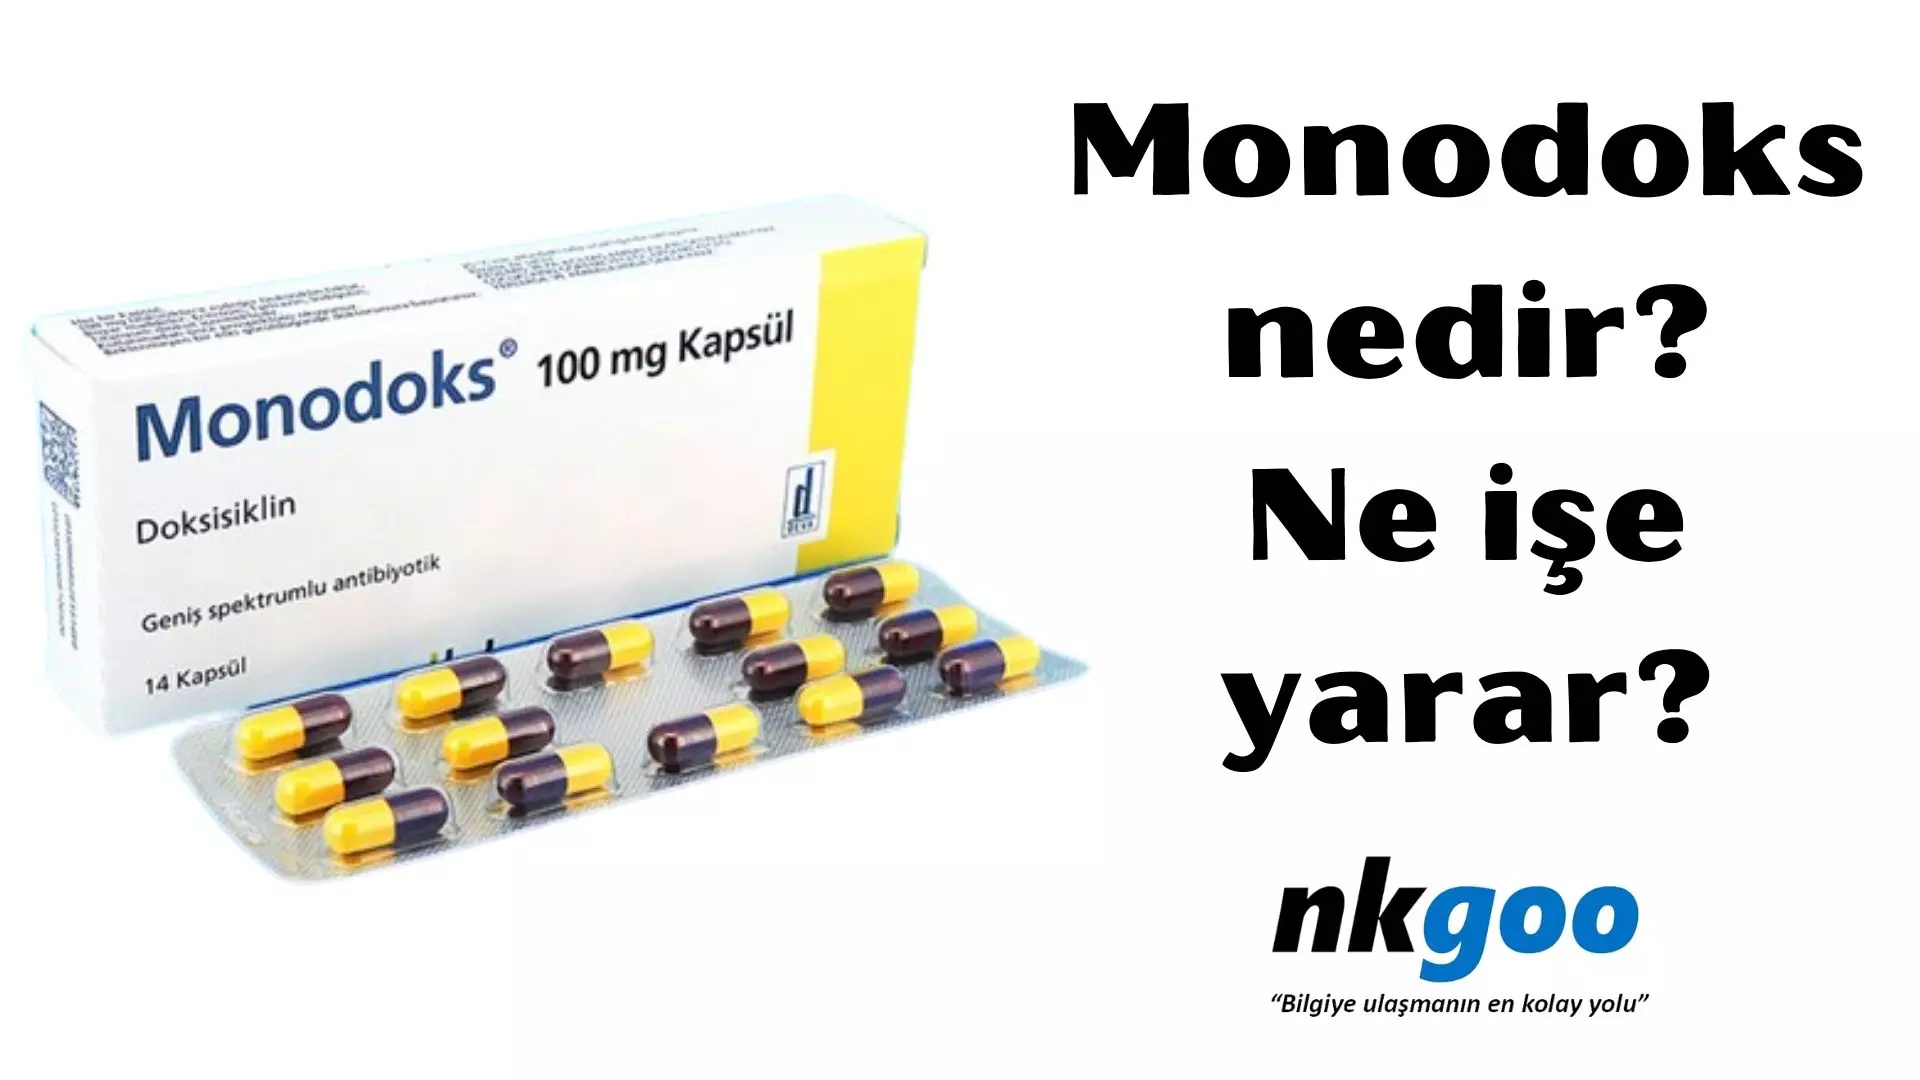 Monodoks nedir? Ne işe yarar? Monodoks 100 mg